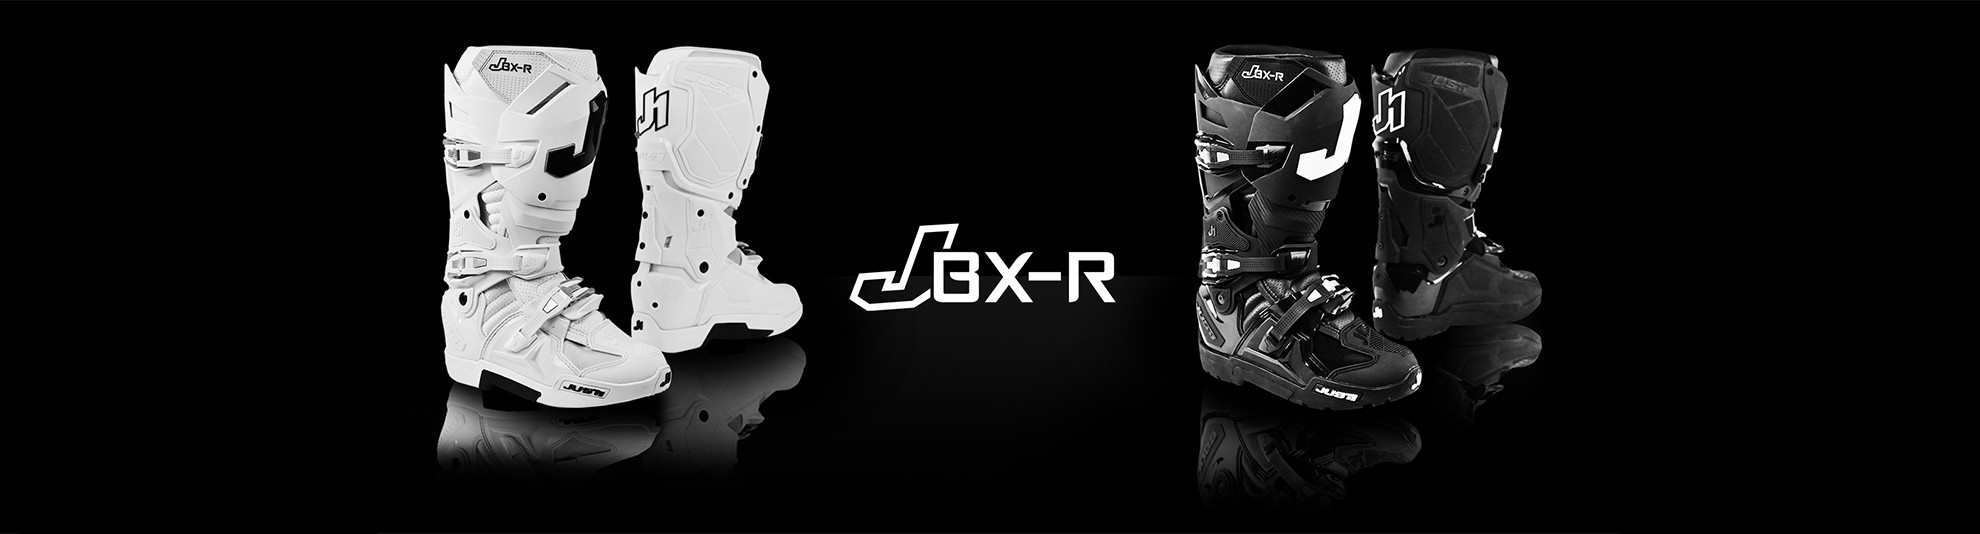 JBX-R ENDURO